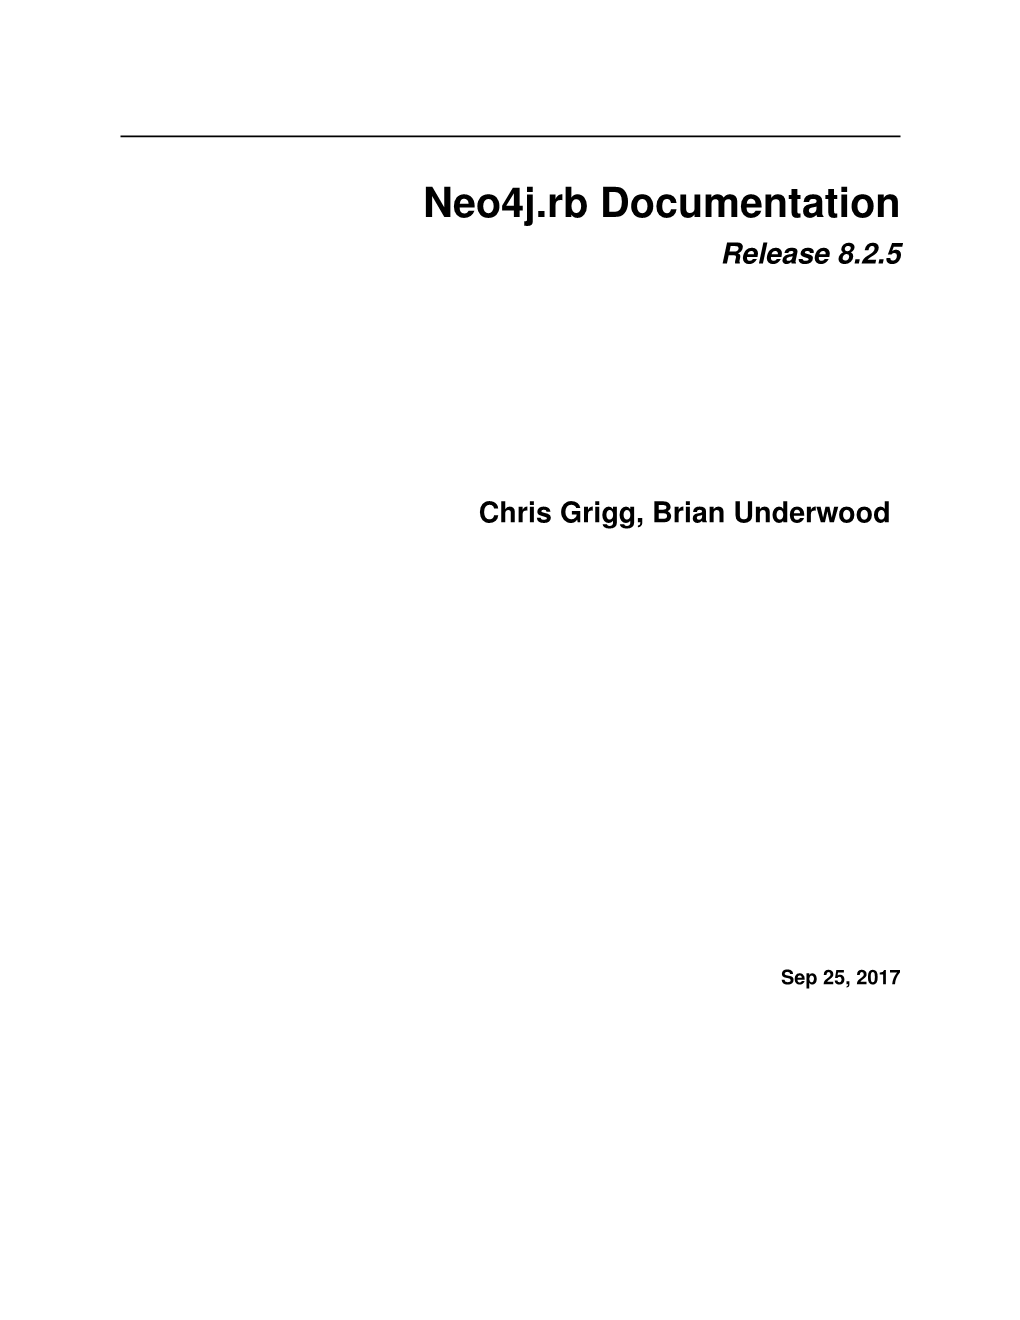 Neo4j.Rb Documentation Release 8.2.5